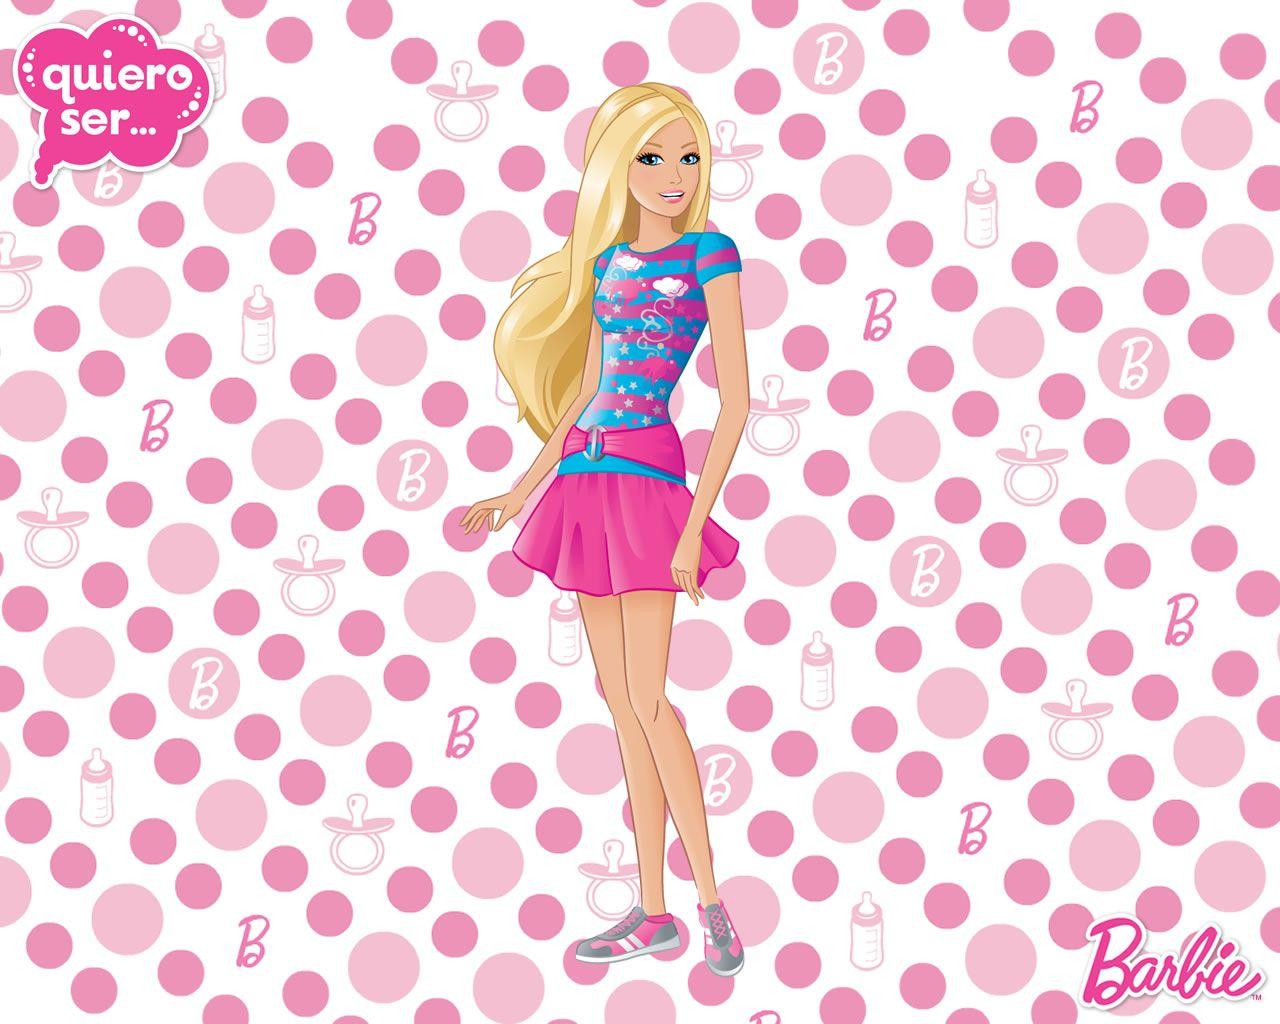 Barbie Wallpaper, Widescreen Wallpaper Of Barbie, WP GX 95 Desktop